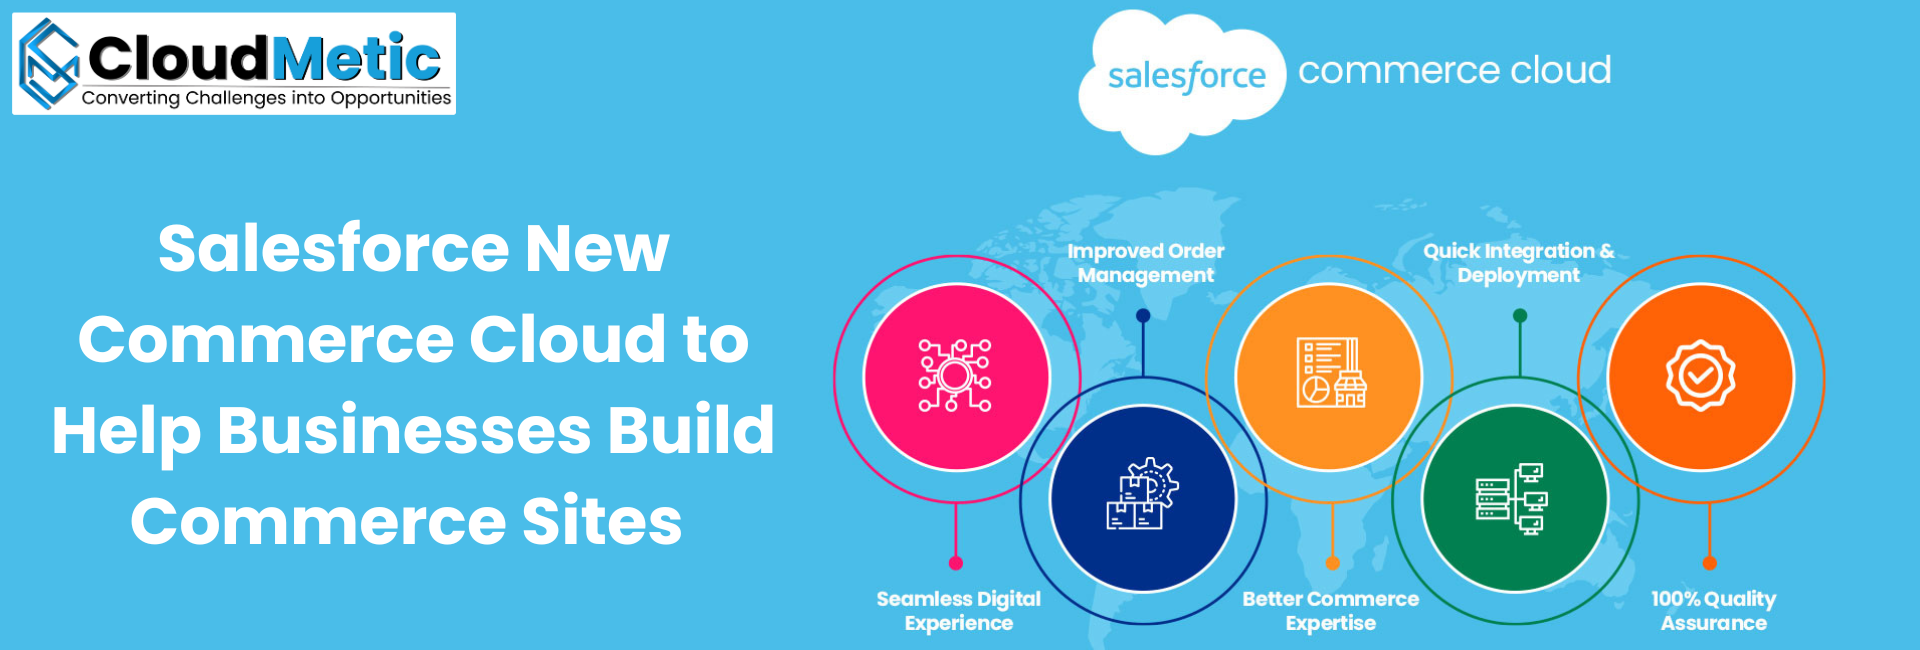 Salesforce New Commerce Cloud to Help Businesses Build Commerce Sites